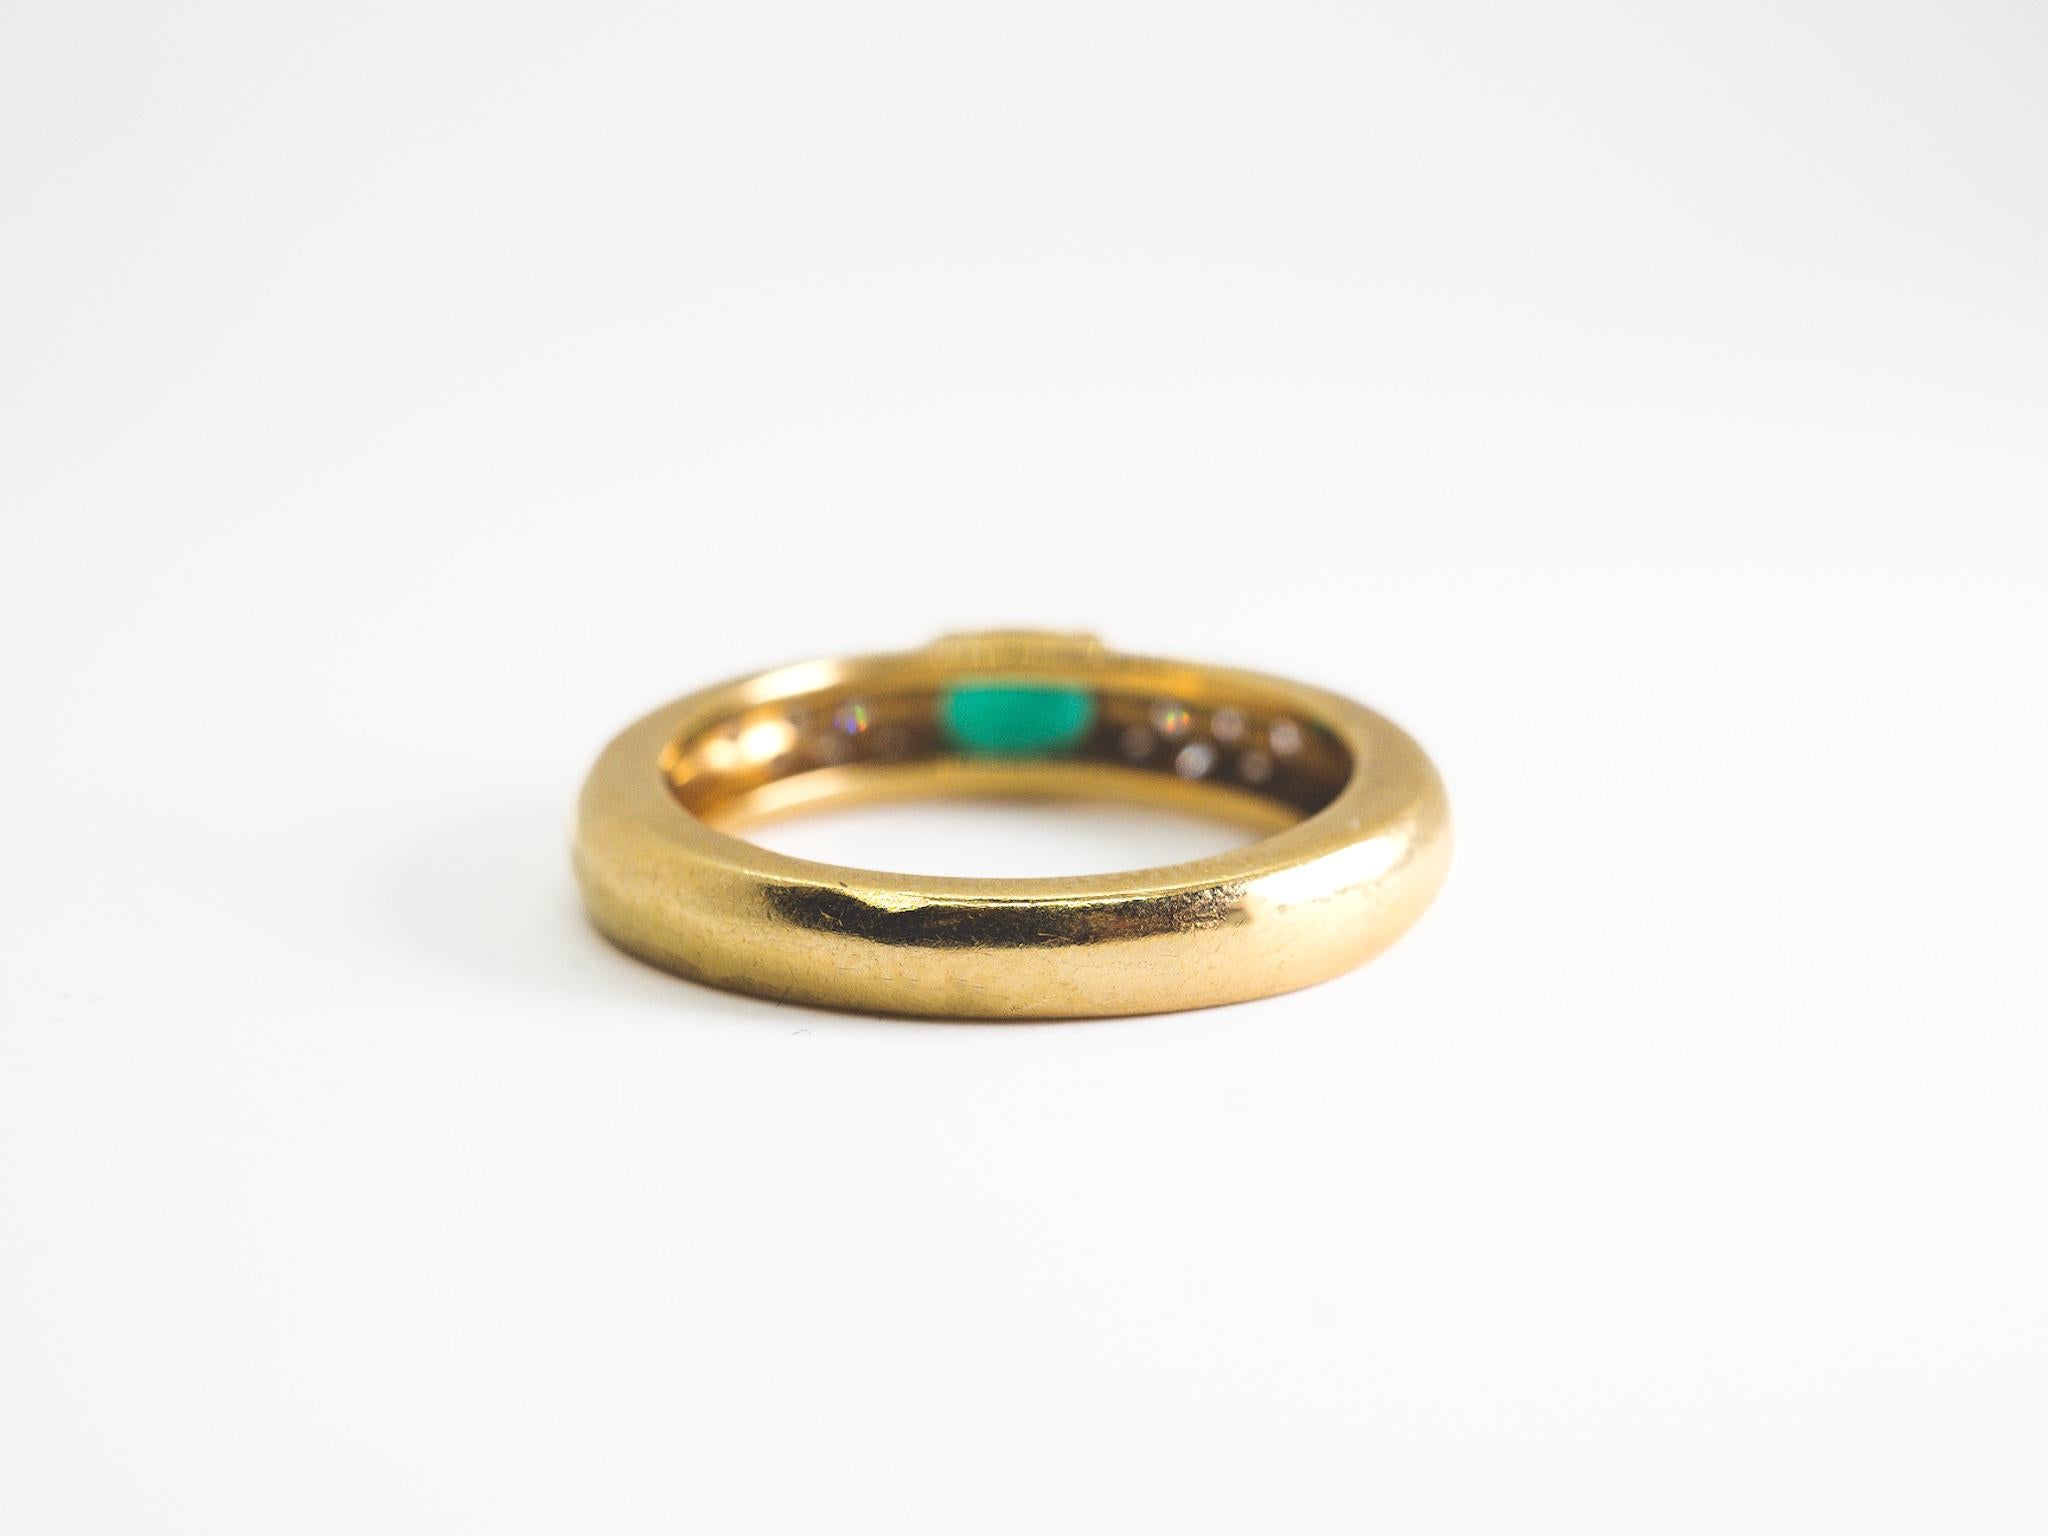 Brilliant Cut Piaget Emerald and Diamond Ring